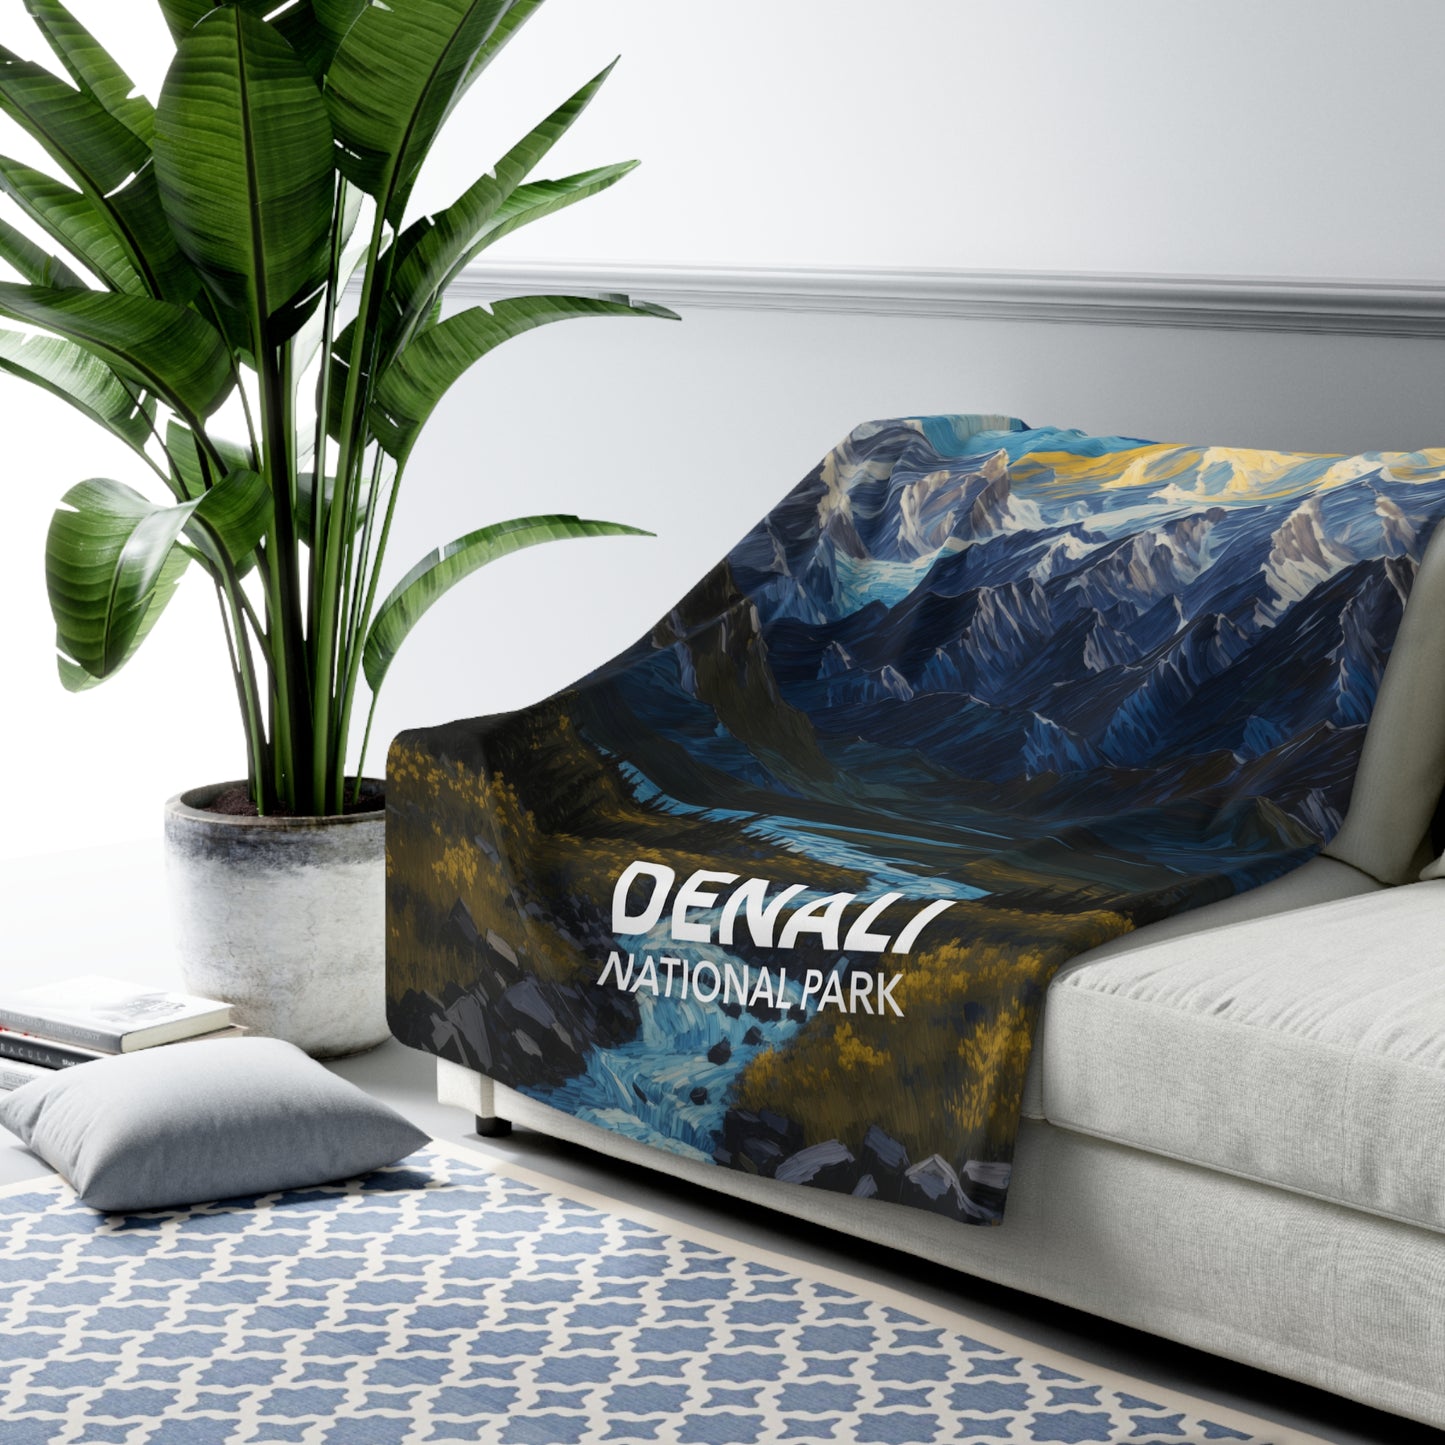 Denali National Park Sherpa Blanket - The Starry Night